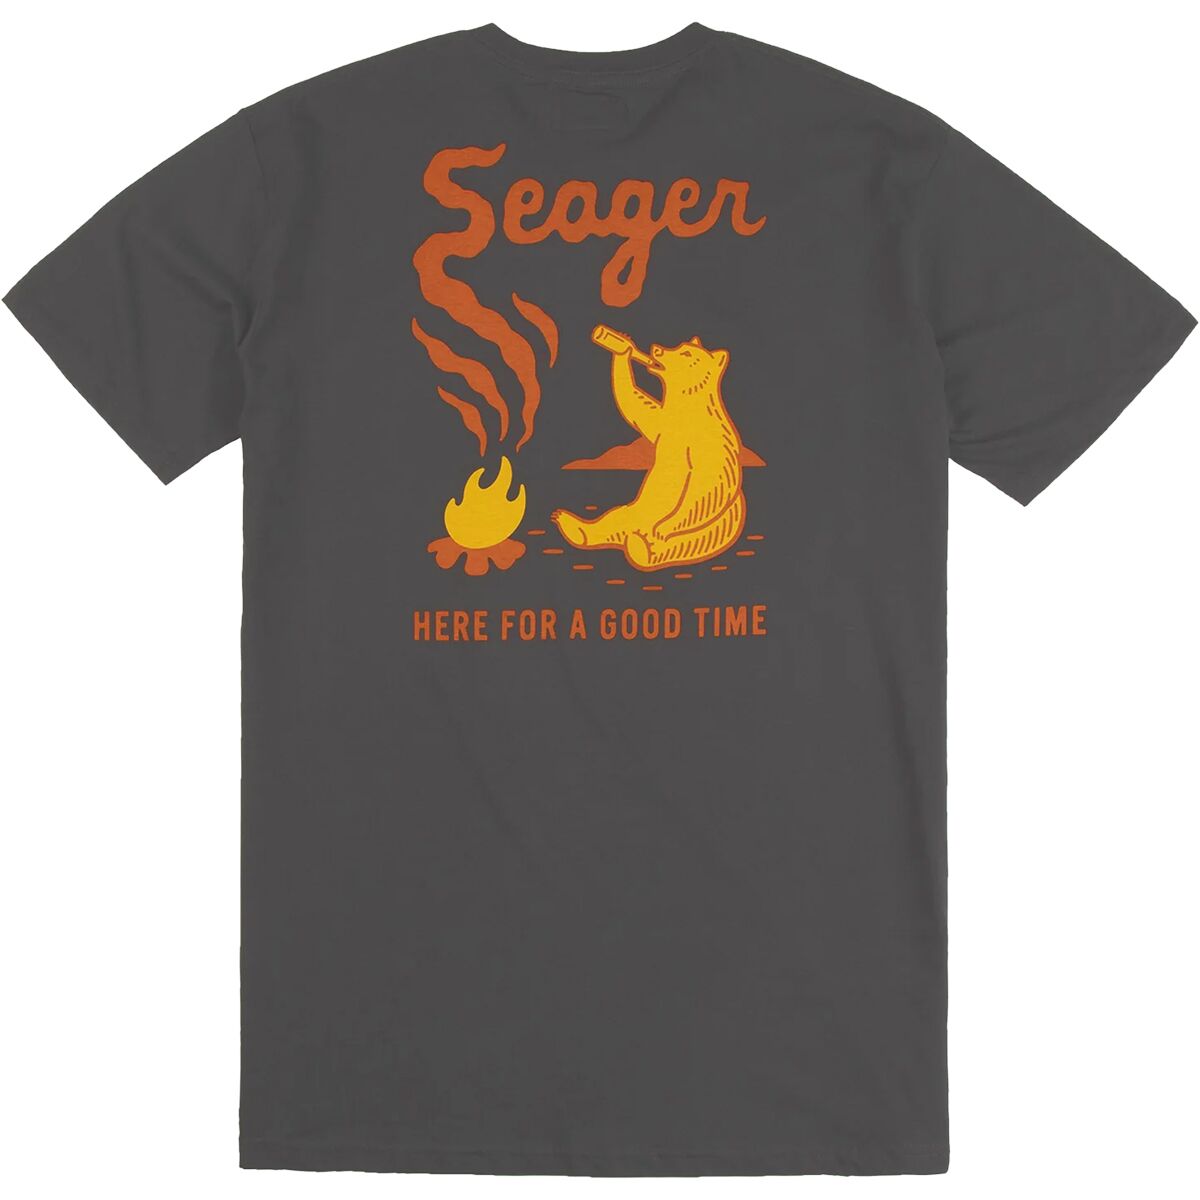 Seager Co. Smokey T-Shirt - Men's